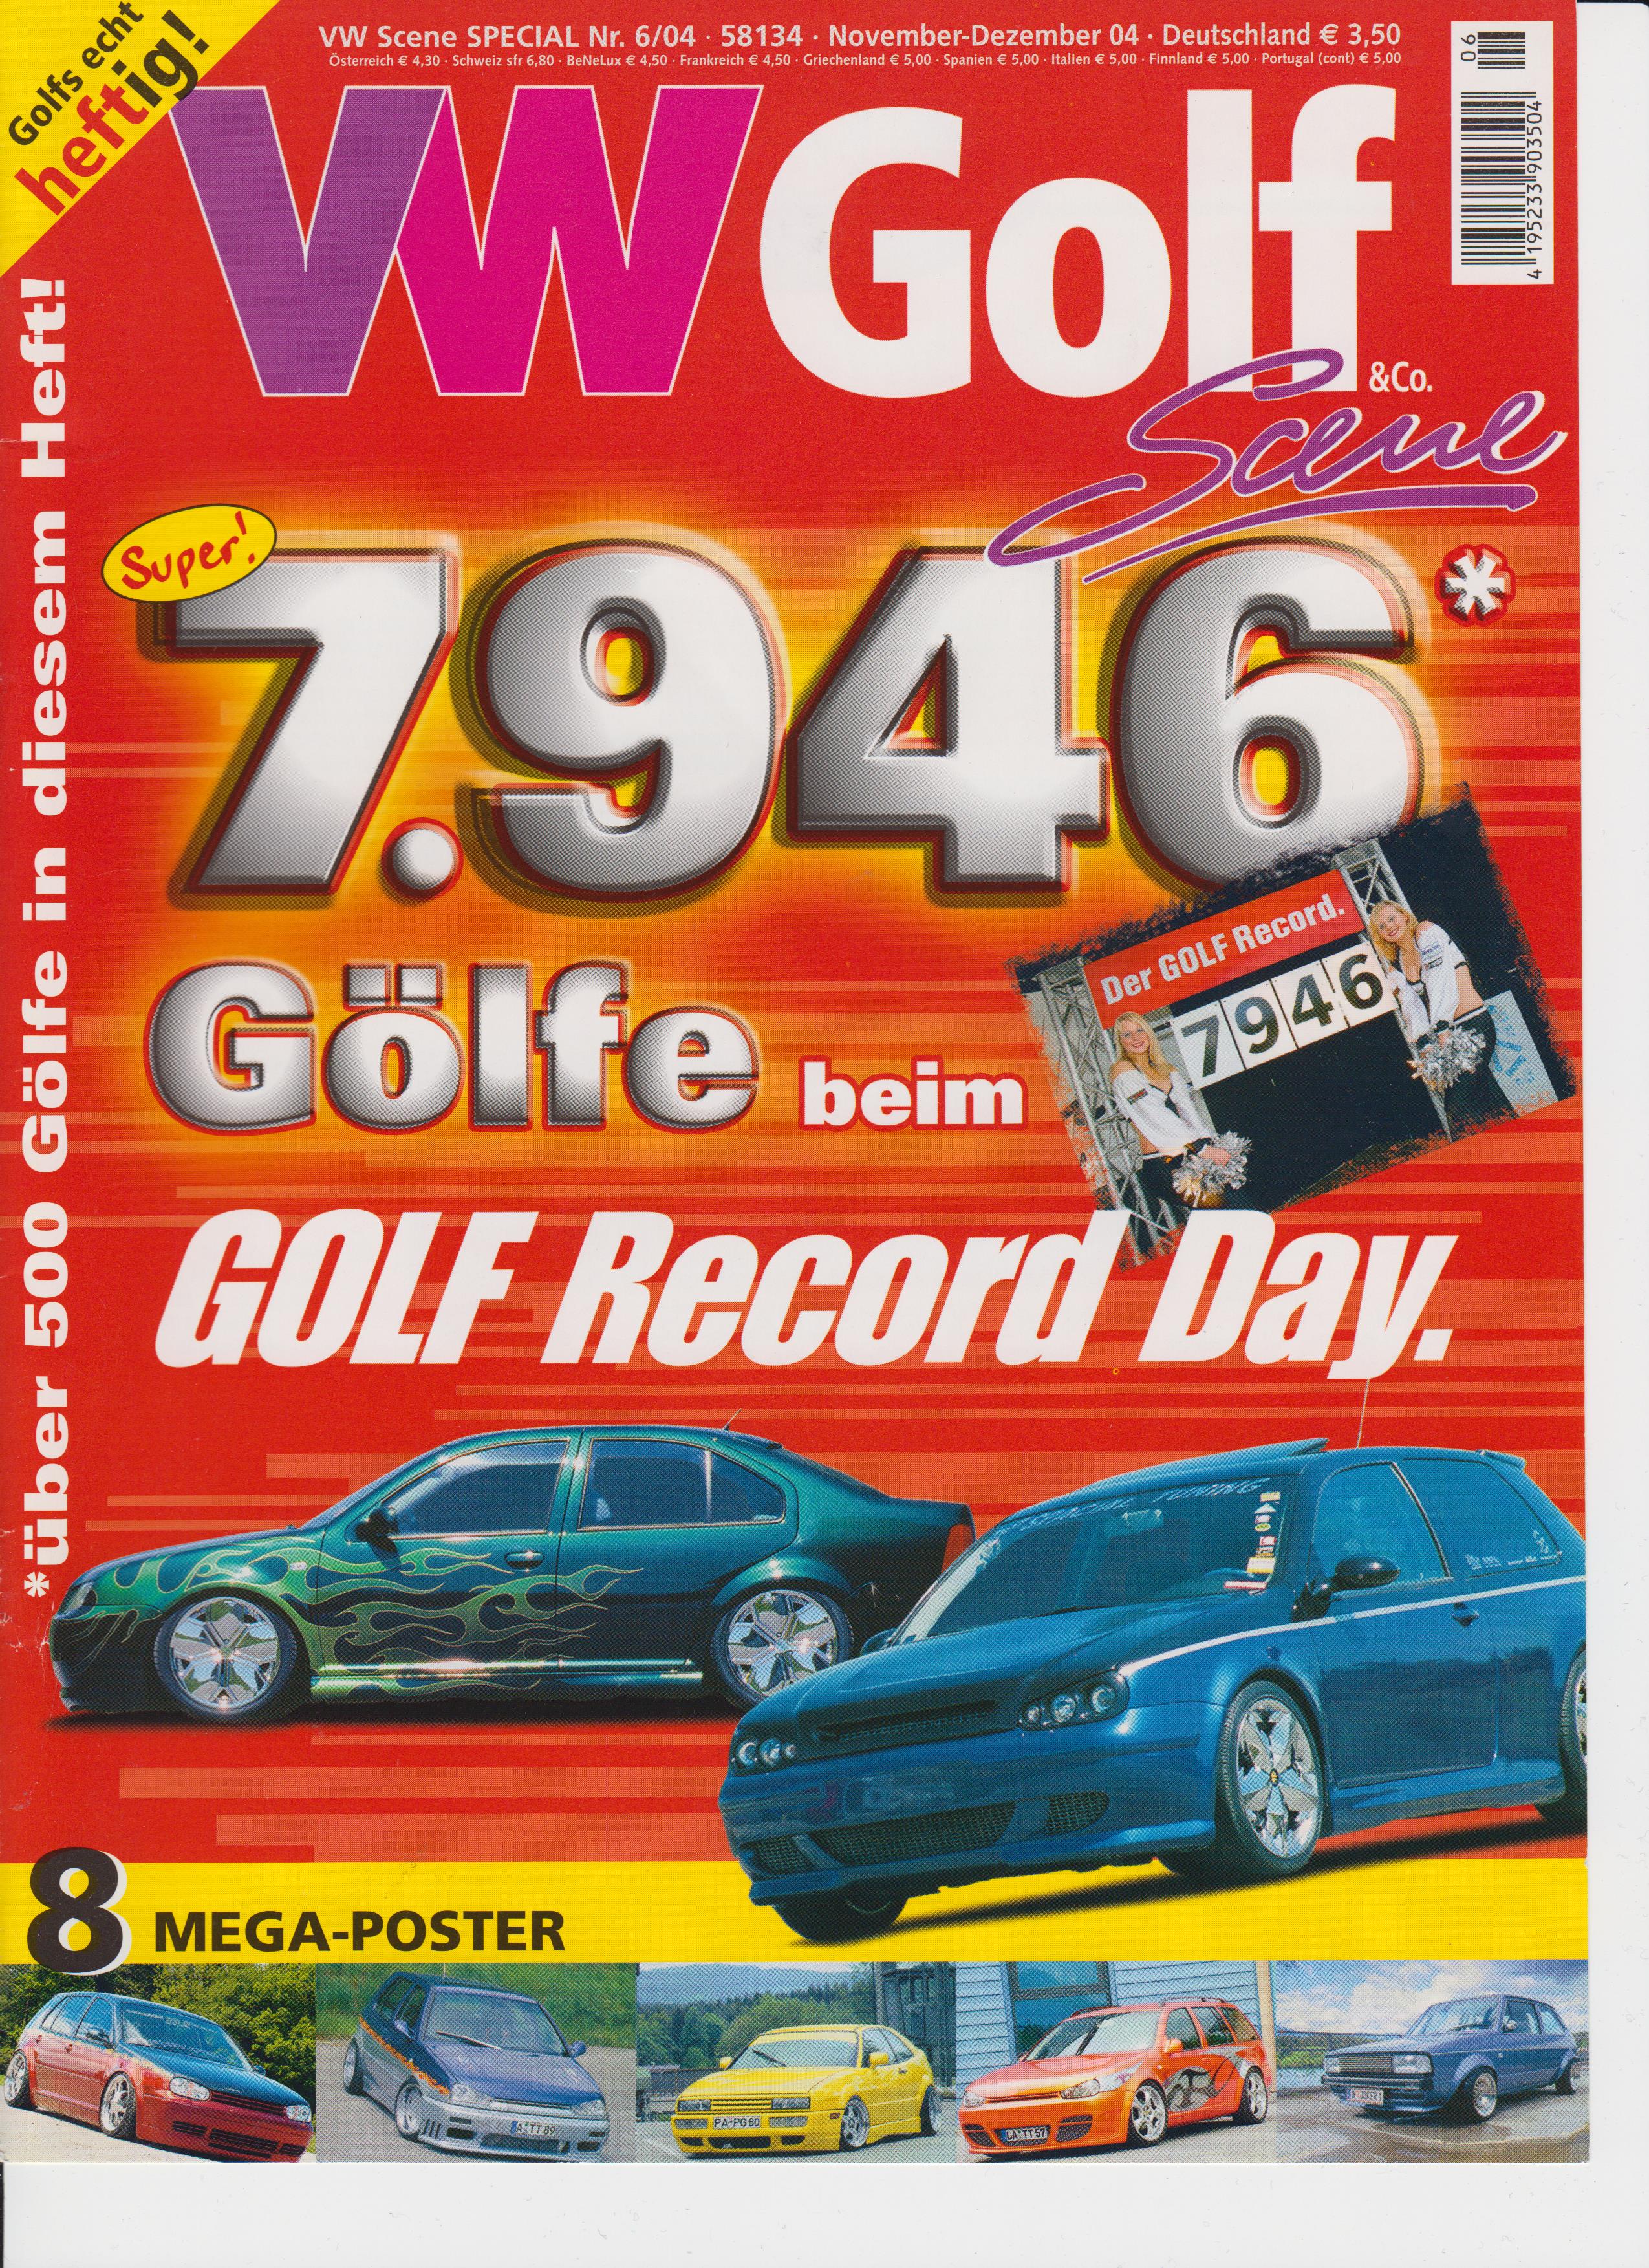 Revista especializada VW Golf 06 2004